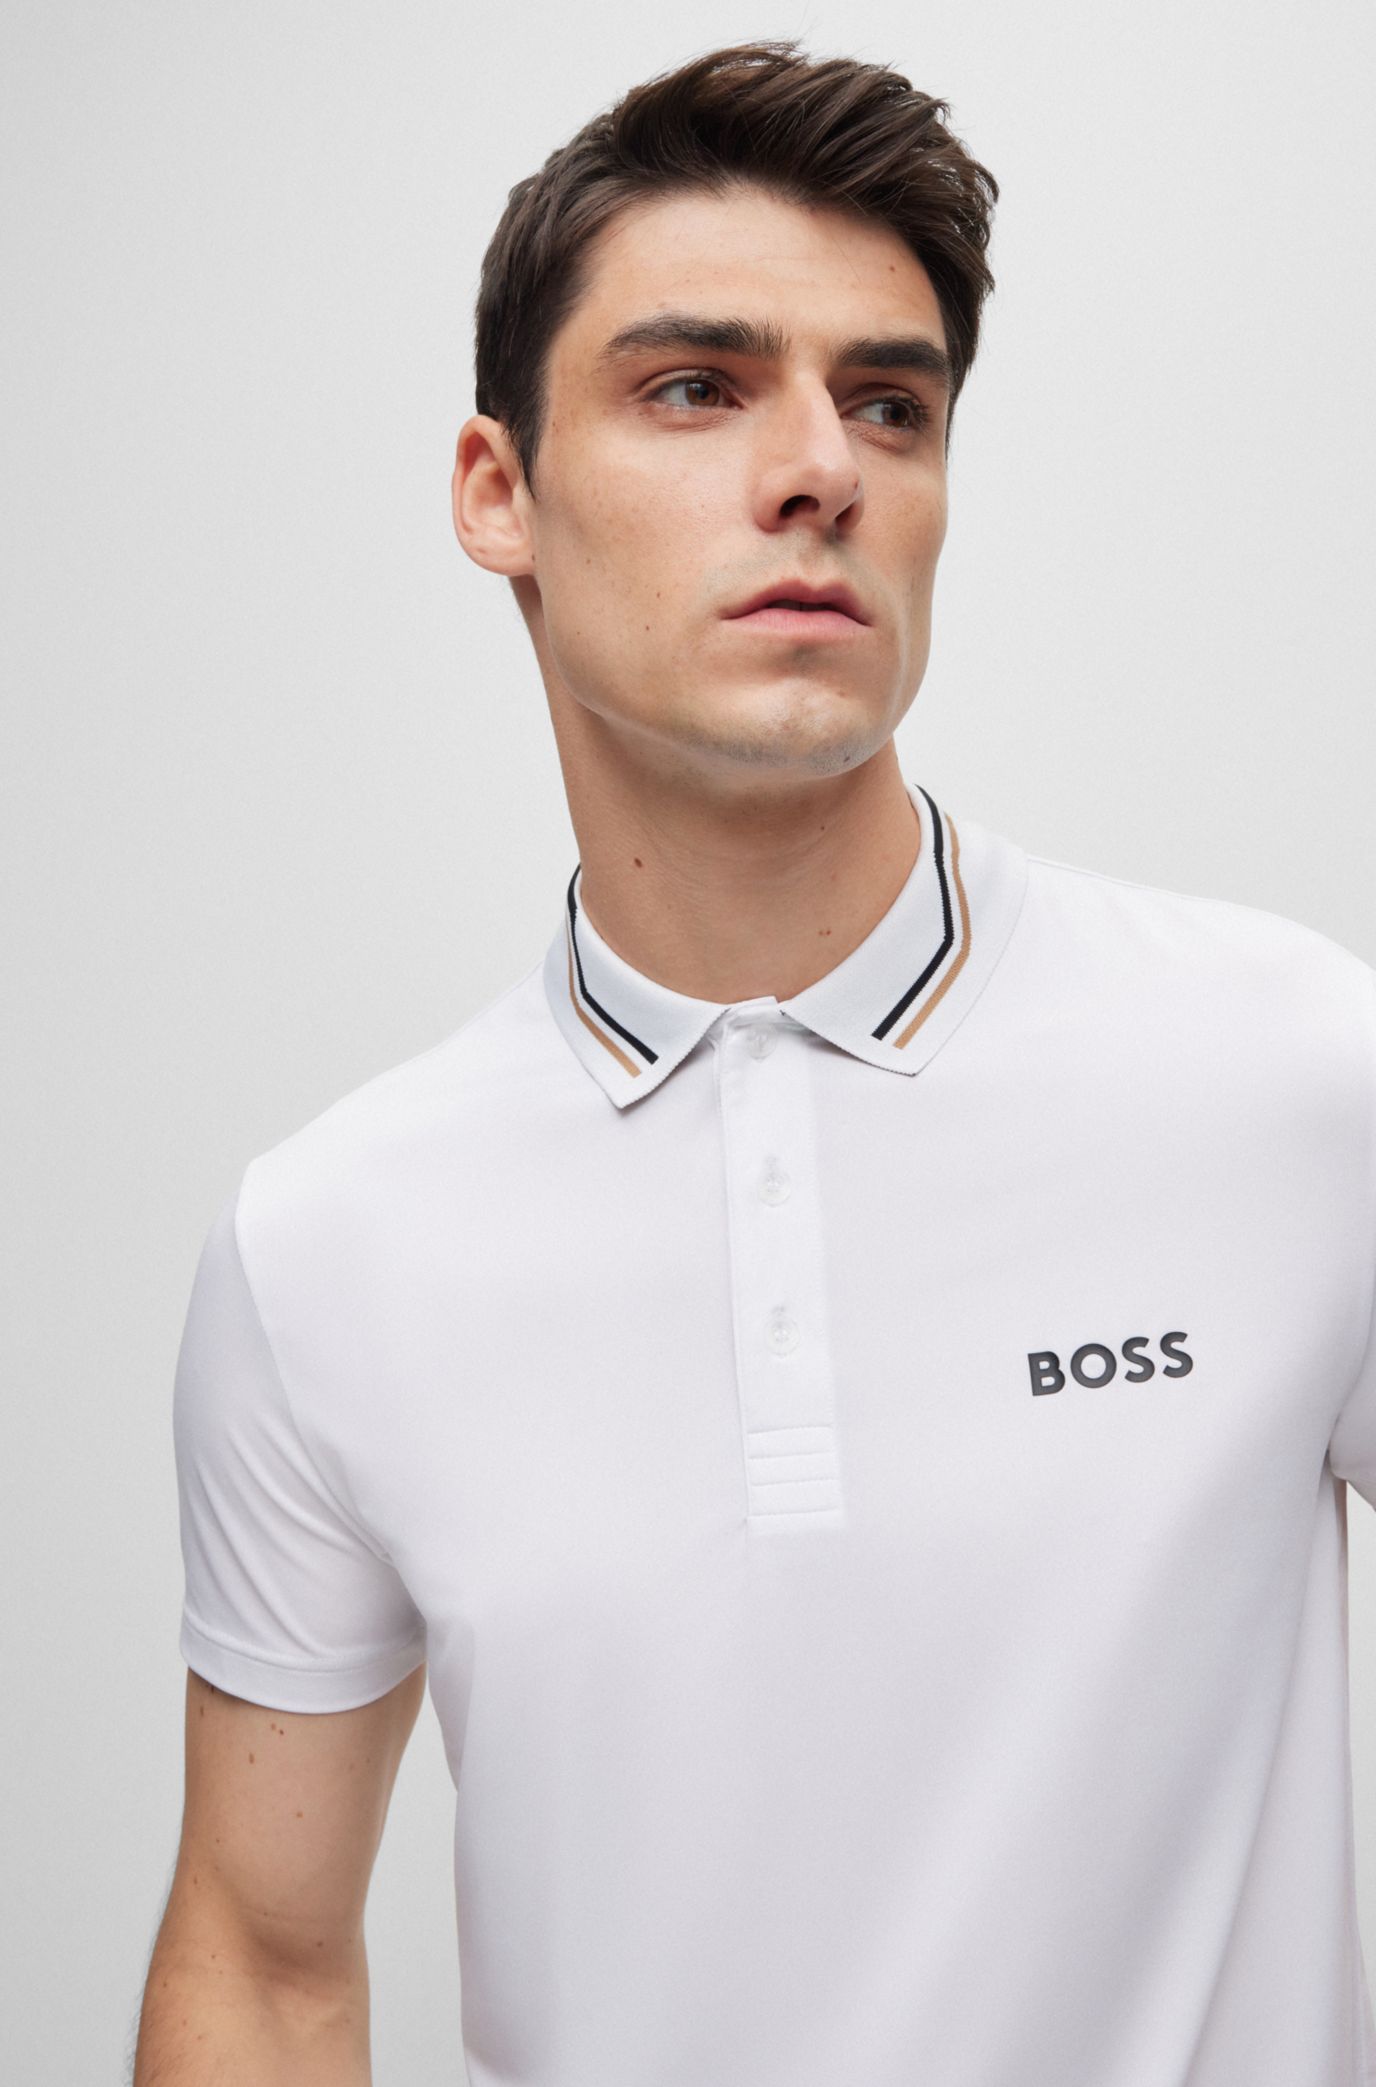 BOSS - shirt collar stripe Contrast-logo polo with